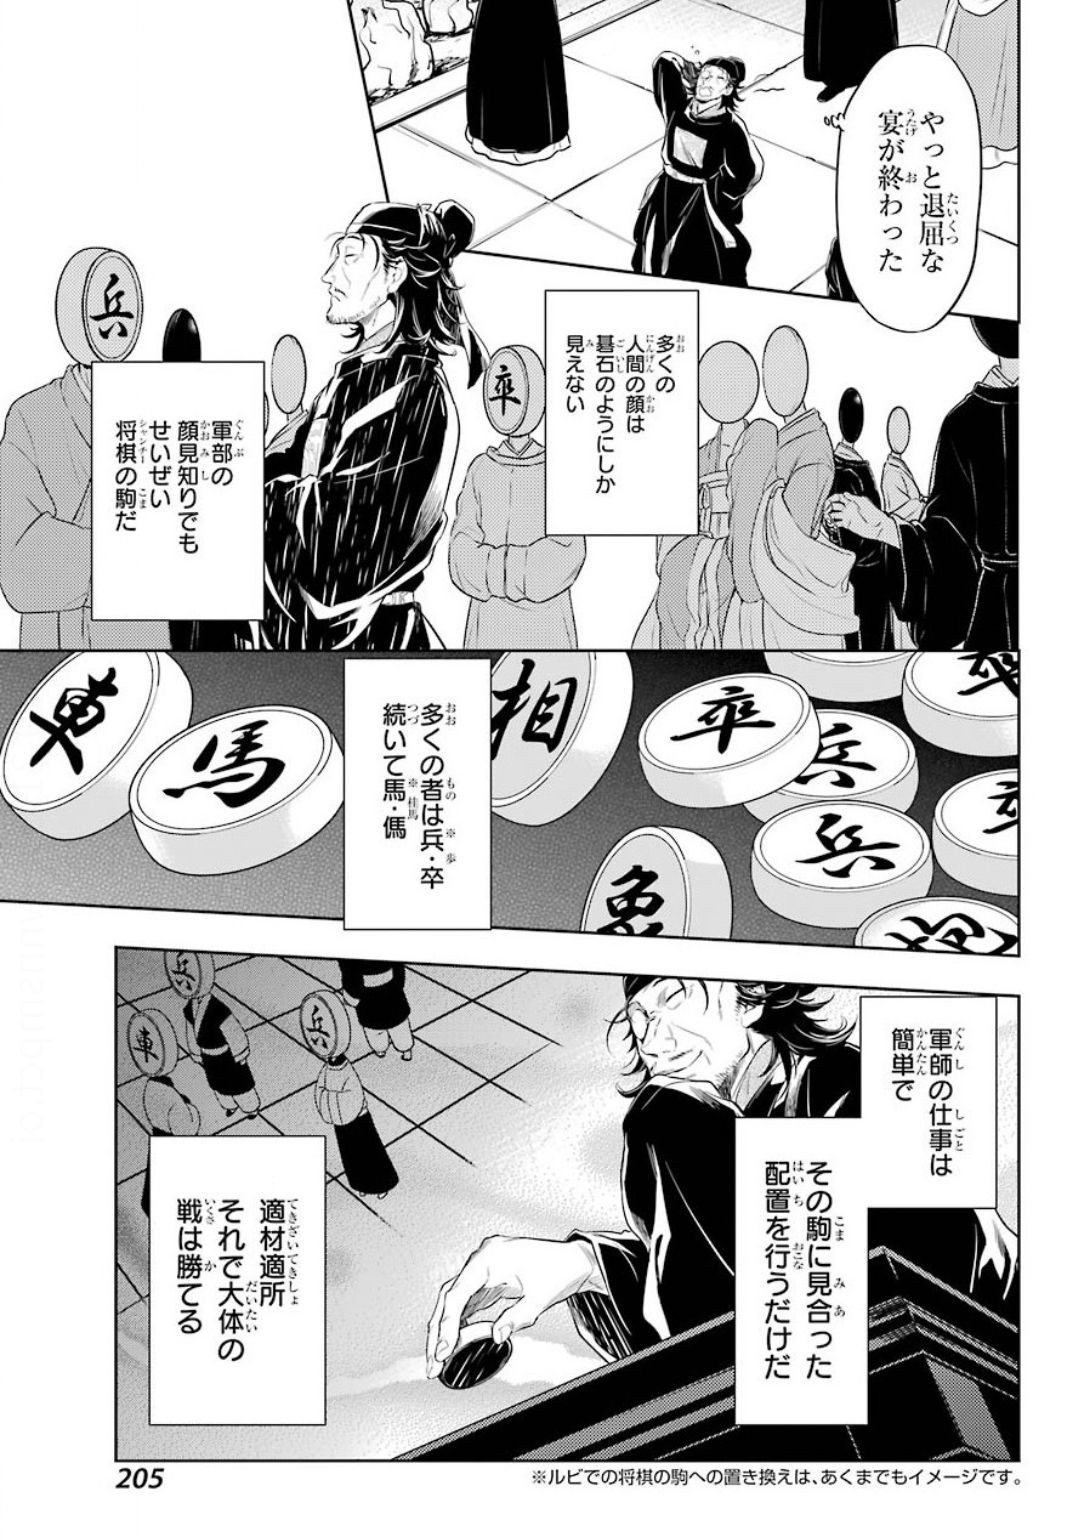 Kusuriya no Hitorigoto - Chapter 36-2 - Page 15